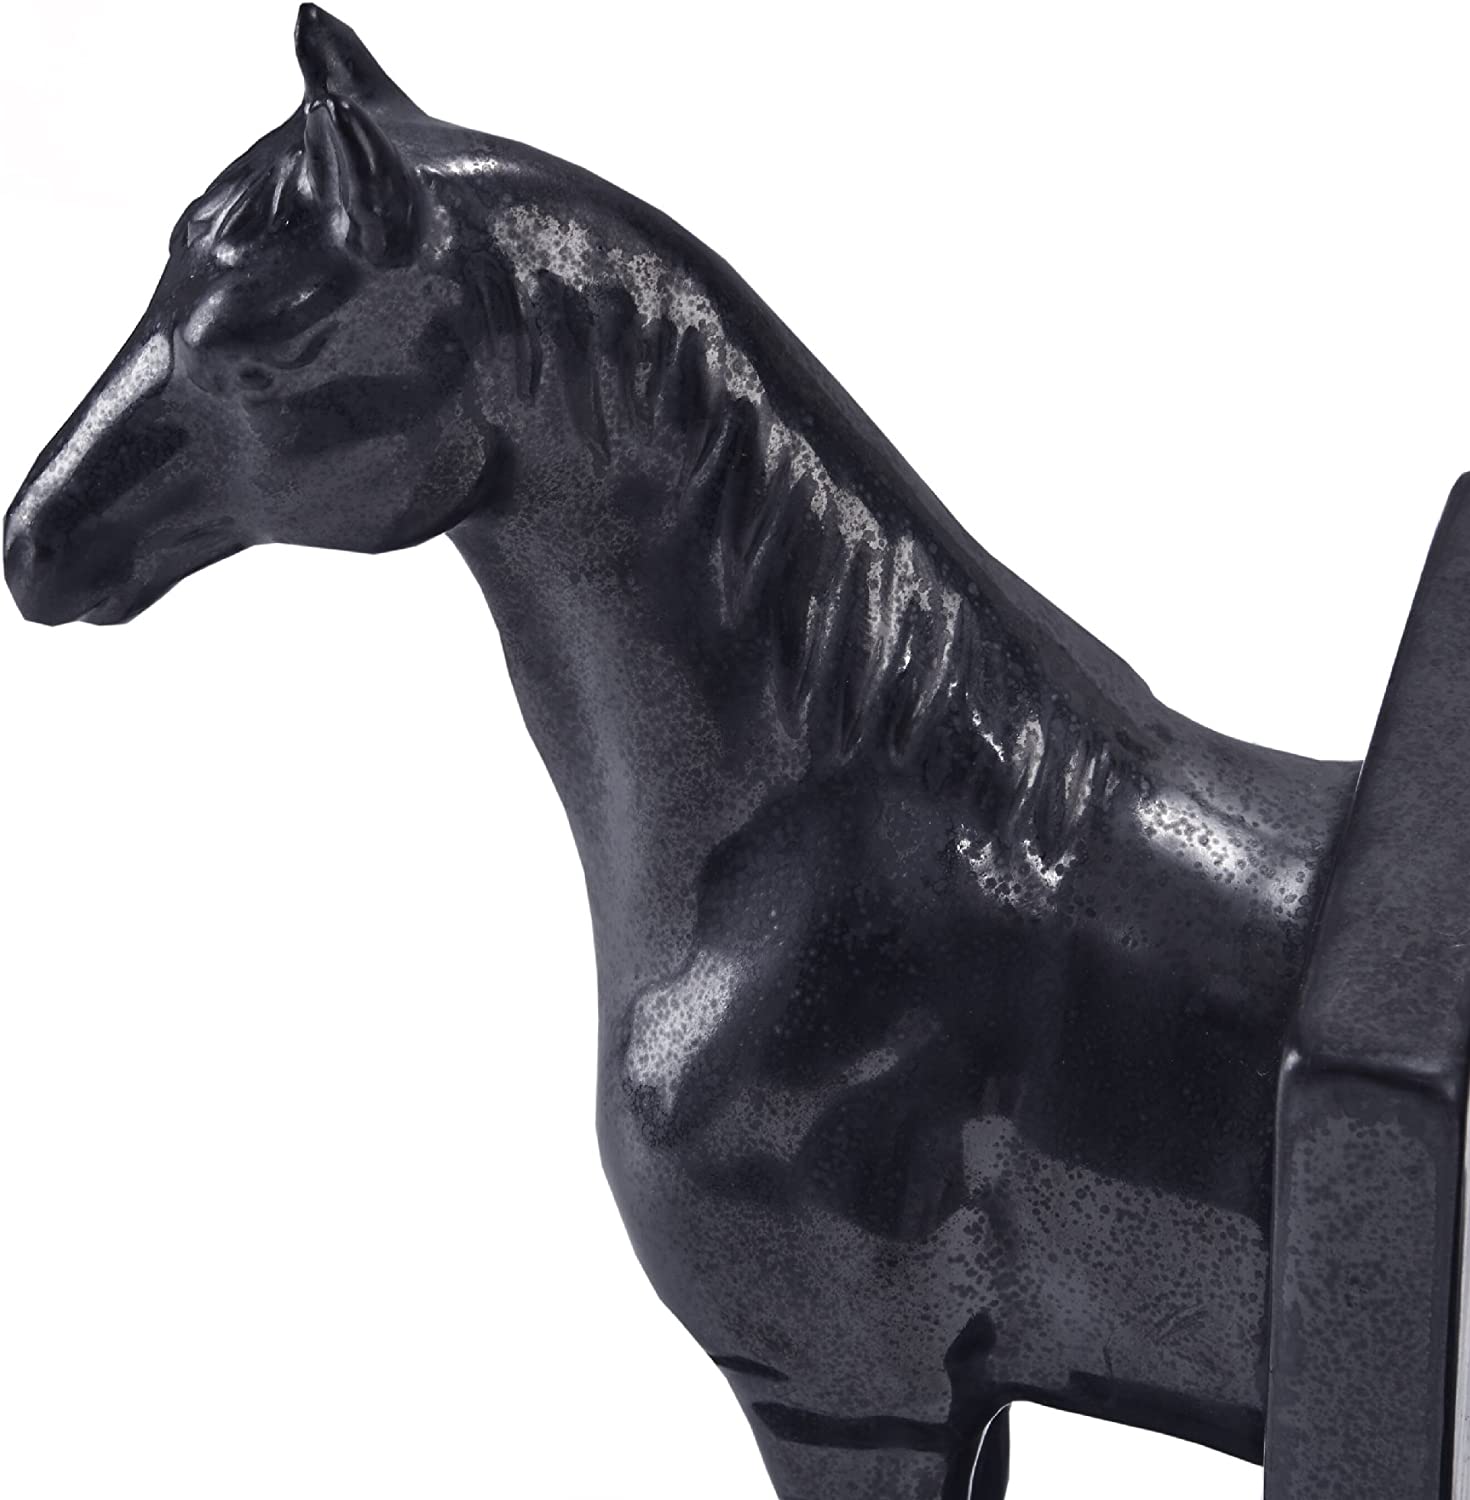 Madison Park Horse Bookends, Metalic Glaze Black